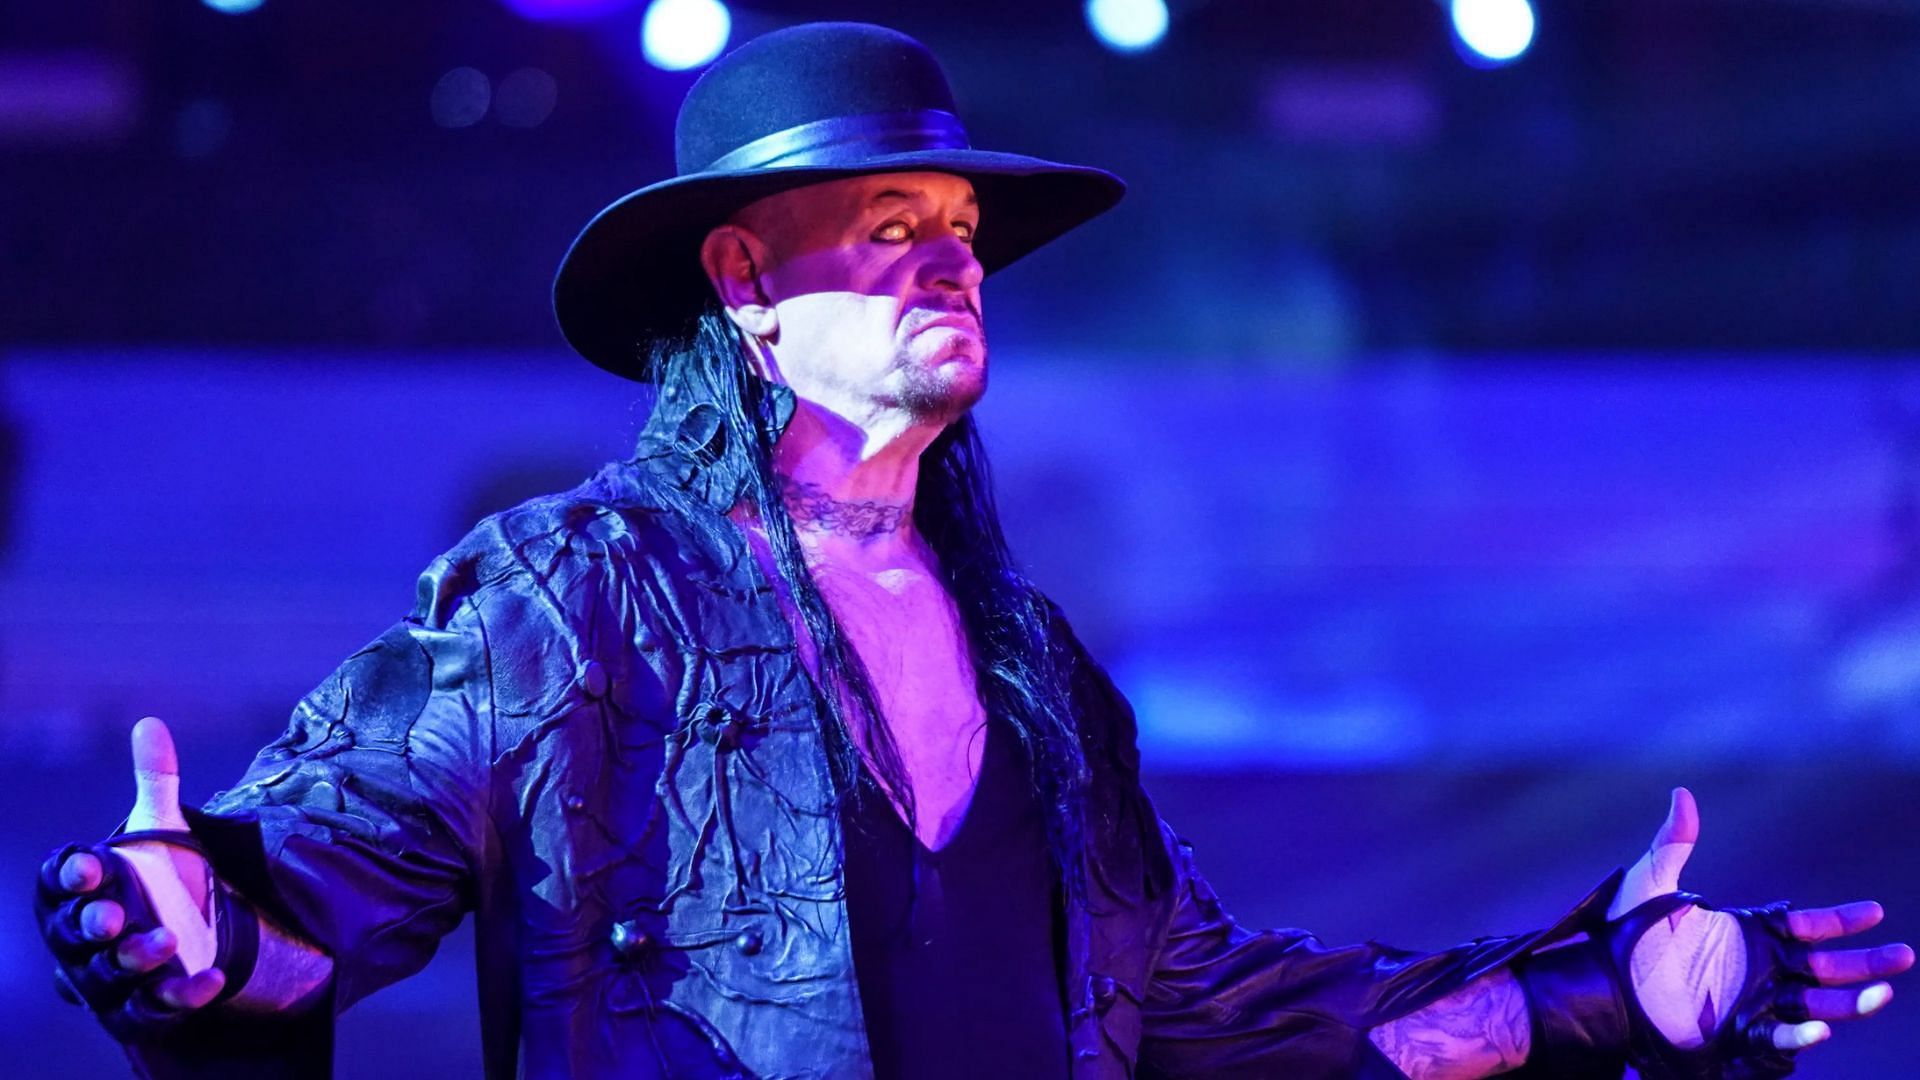 WWE Hall of Famer The Undertaker 